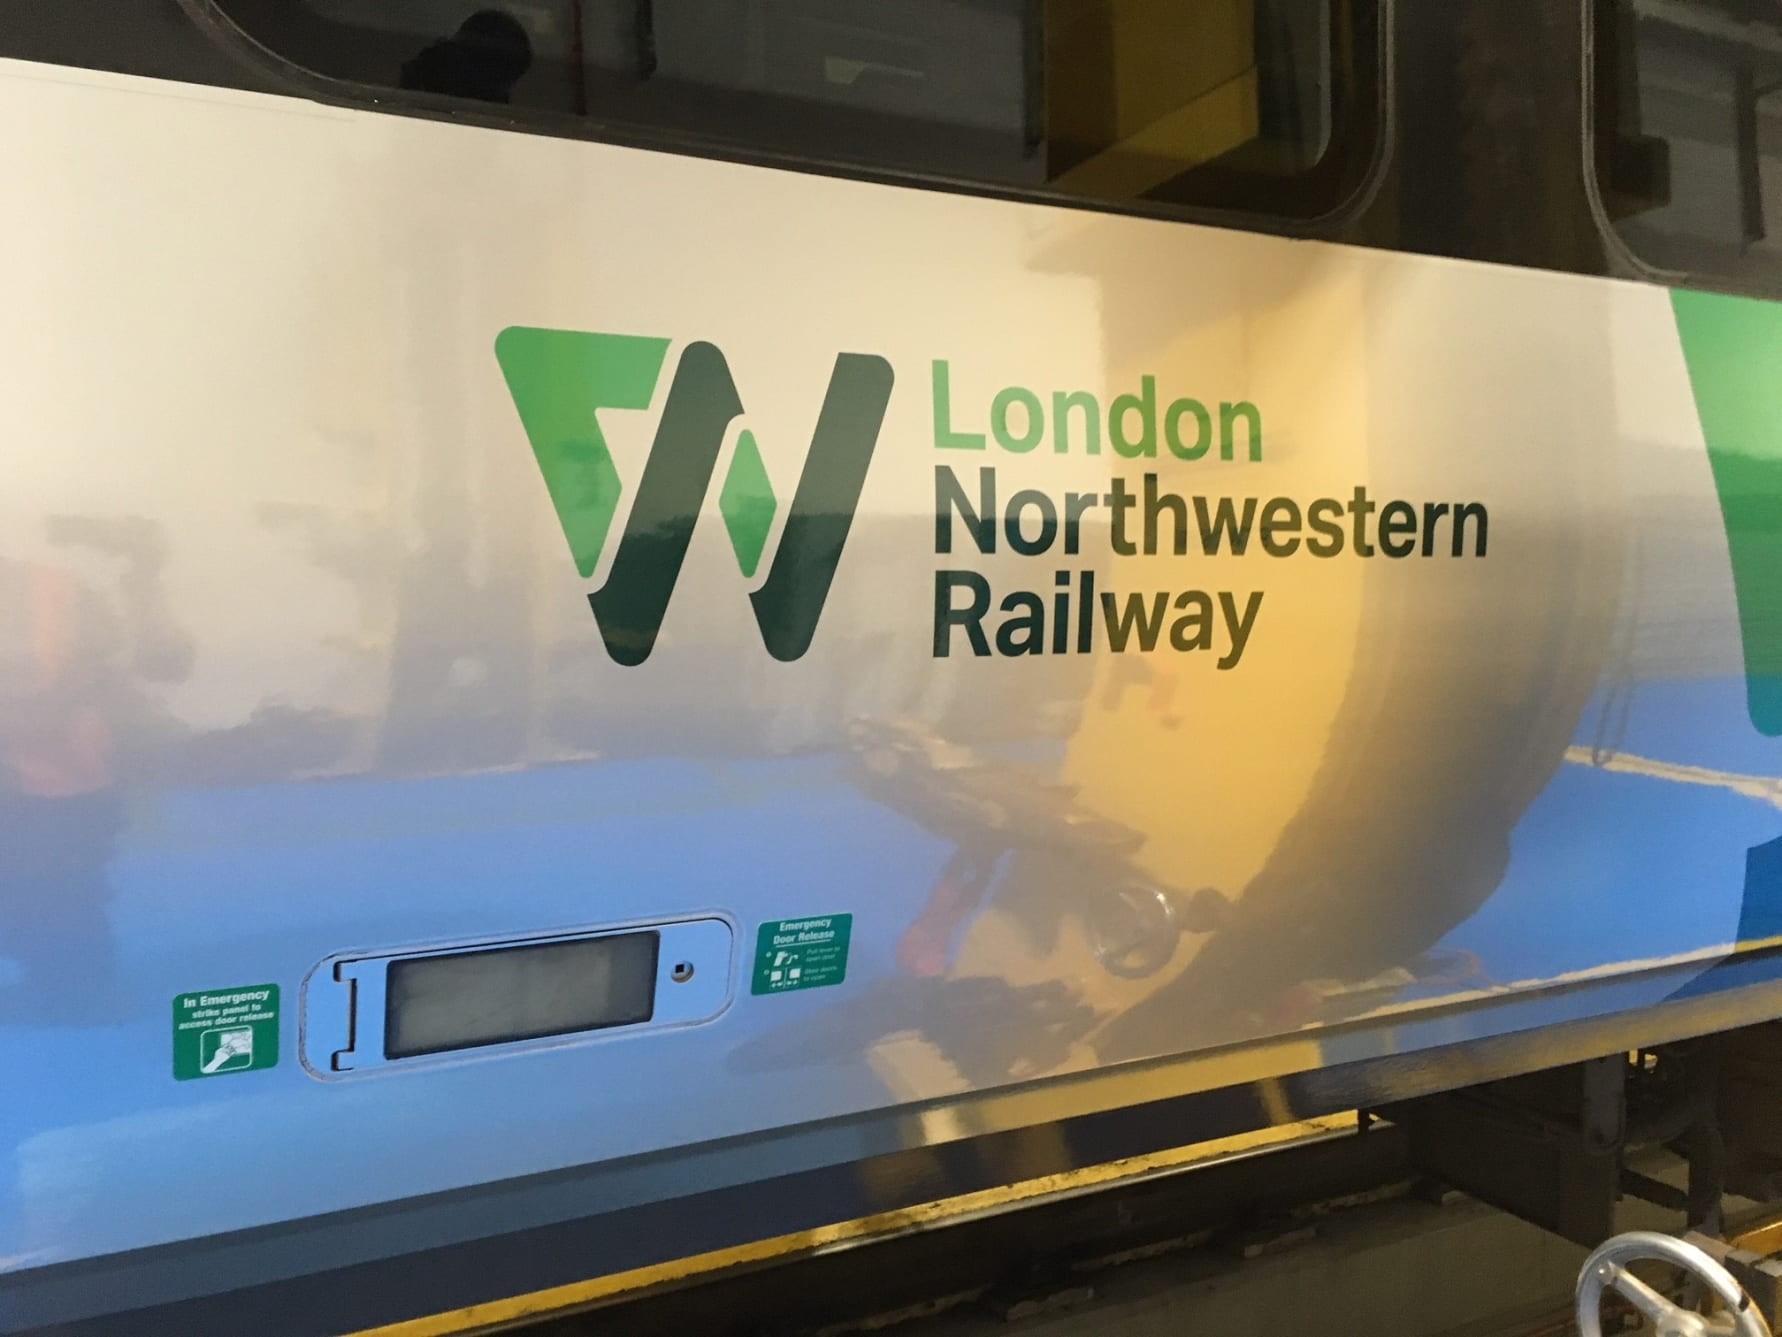 London Northwestern Railway provides additional service for Marathon runners